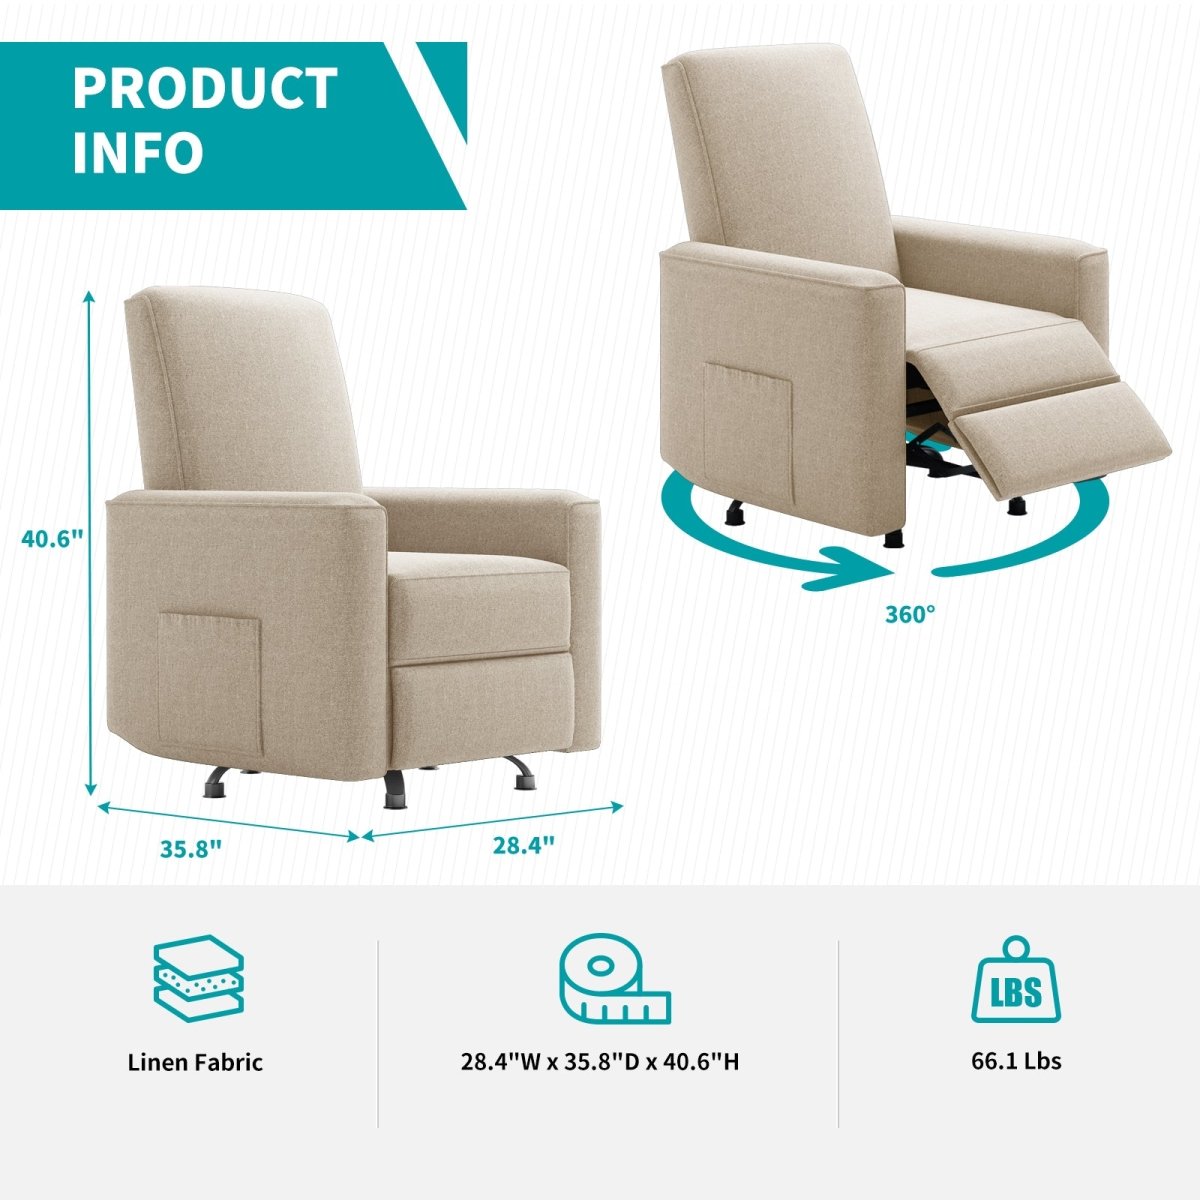 Recliner | Upholstered Chair with 360° Swivel Glider - Mjkonerecliner